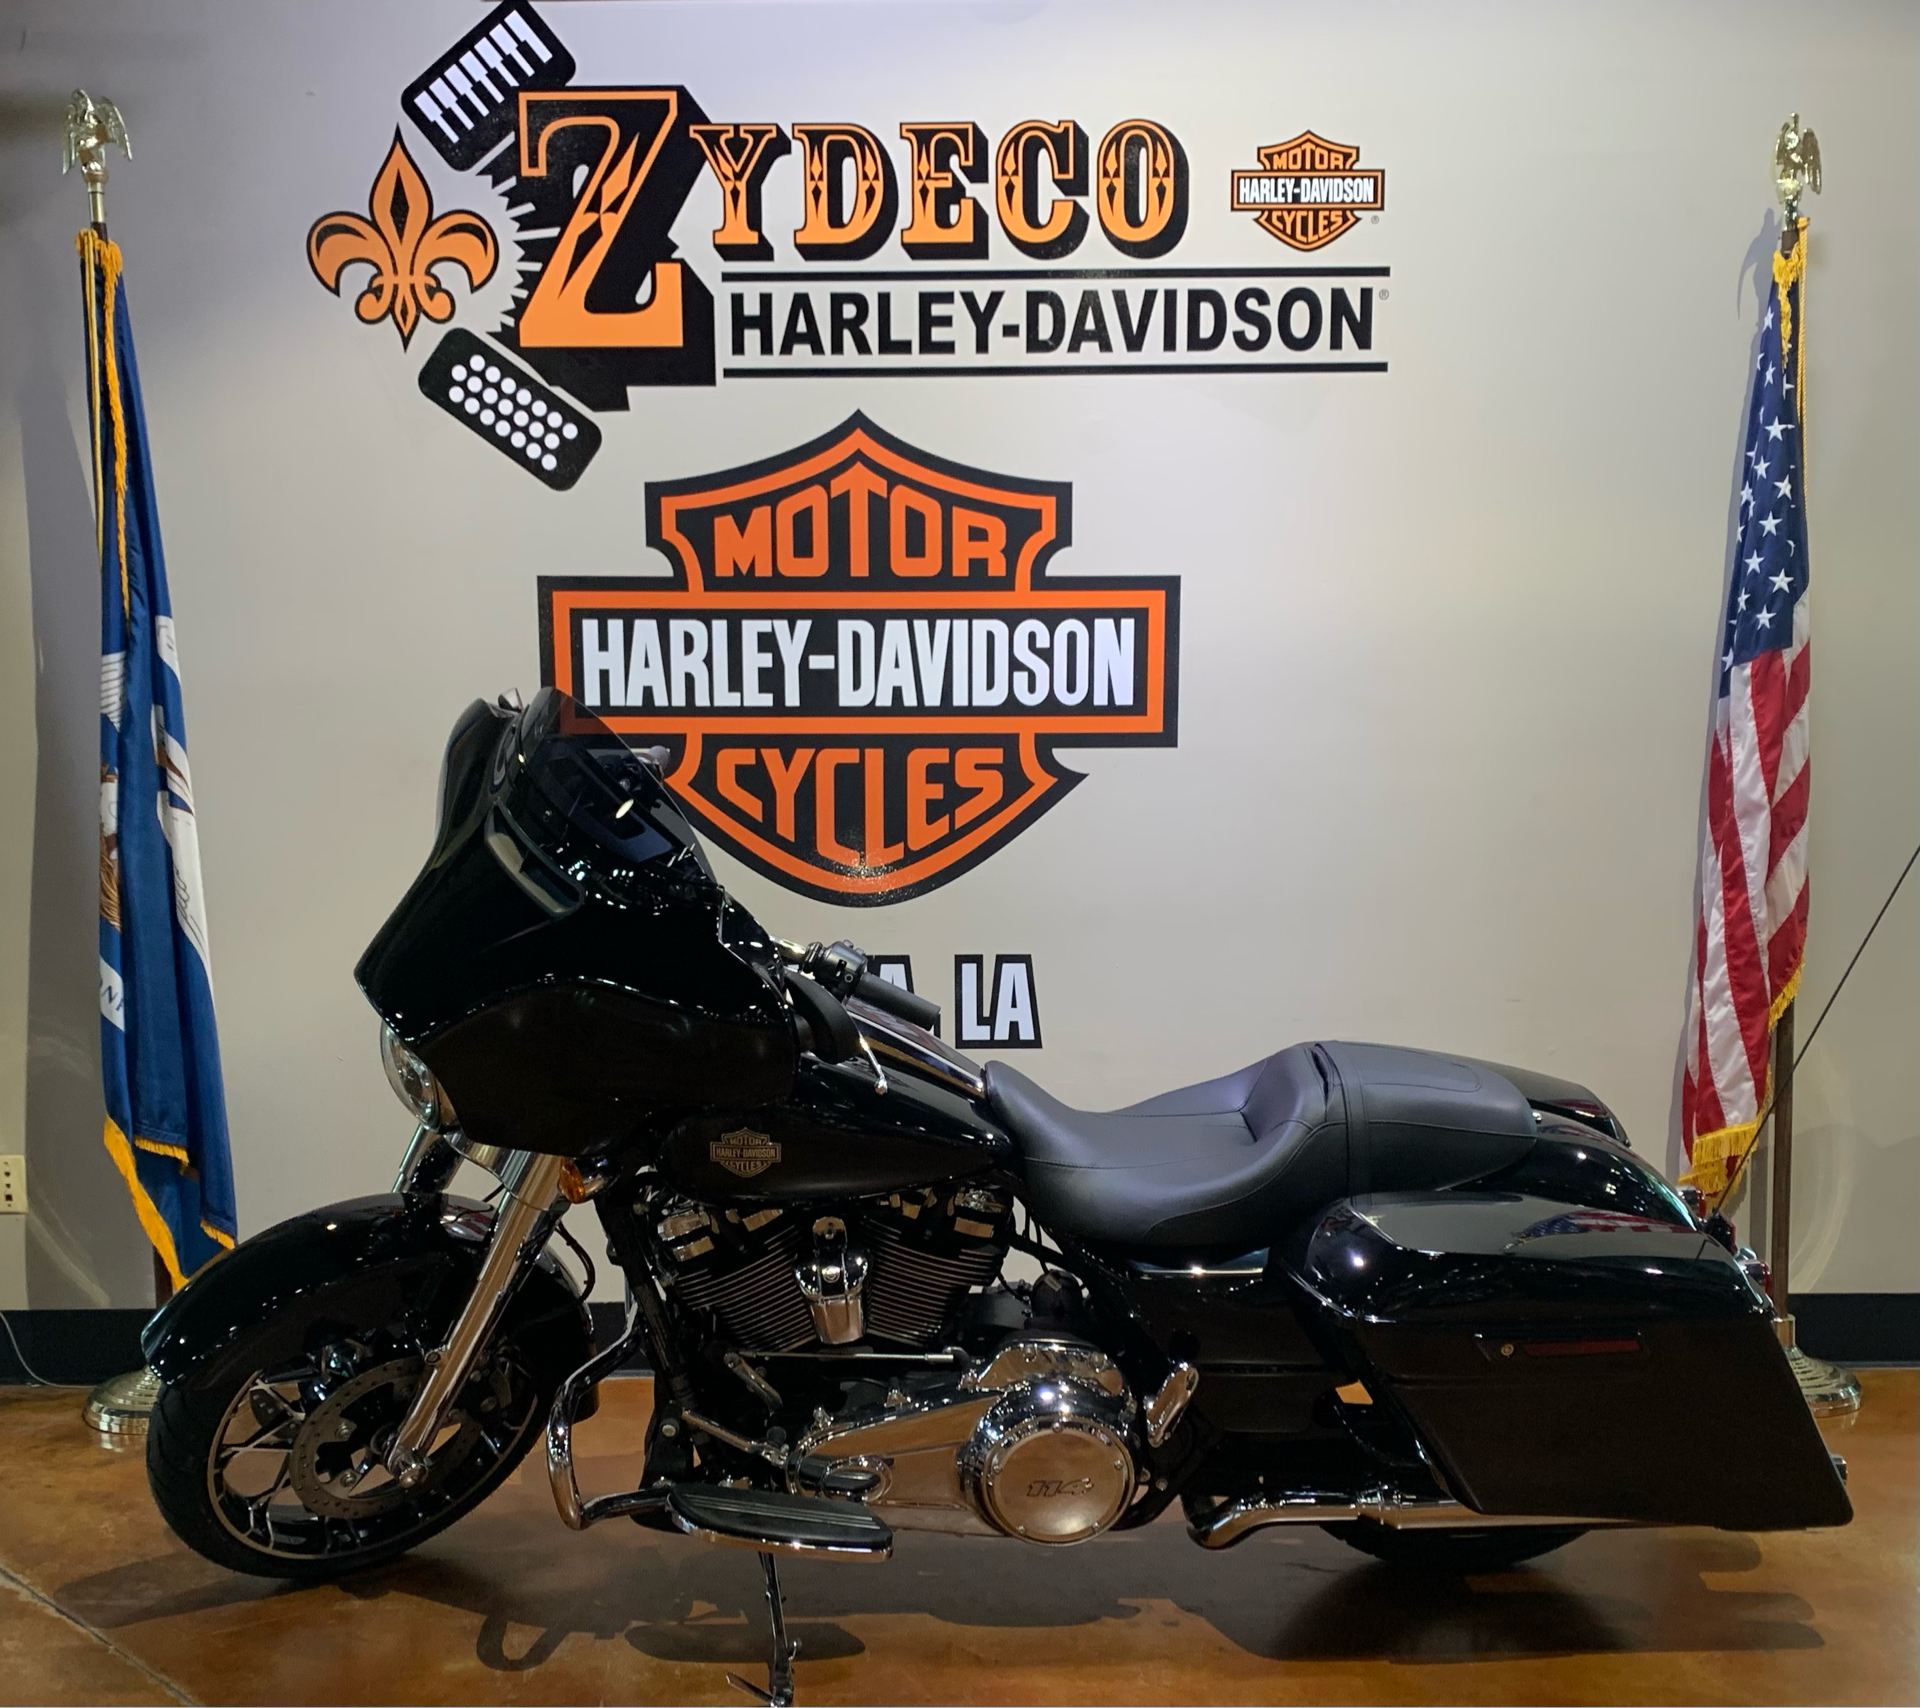 2021 Harley-Davidson Street Glide used - Photo 8